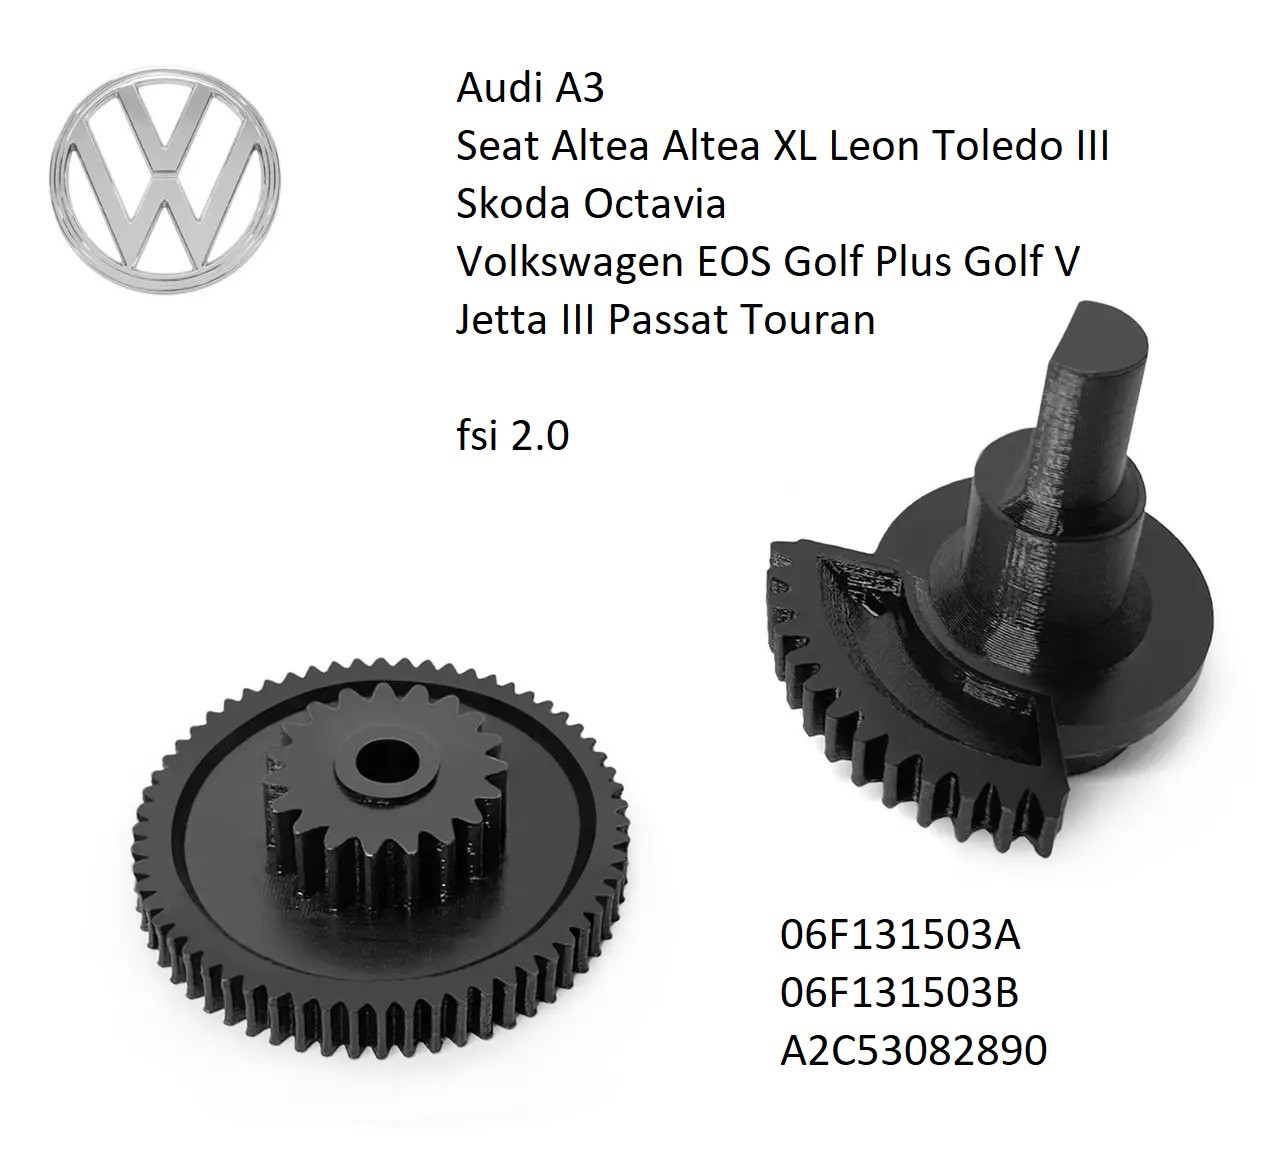 Шестерні клапана EGR fsi 2.0 VW EOS Golf Plus, Golf V Jetta III Passat, Touran Skoda Oct Audi A3 ЄДР 06F131503B